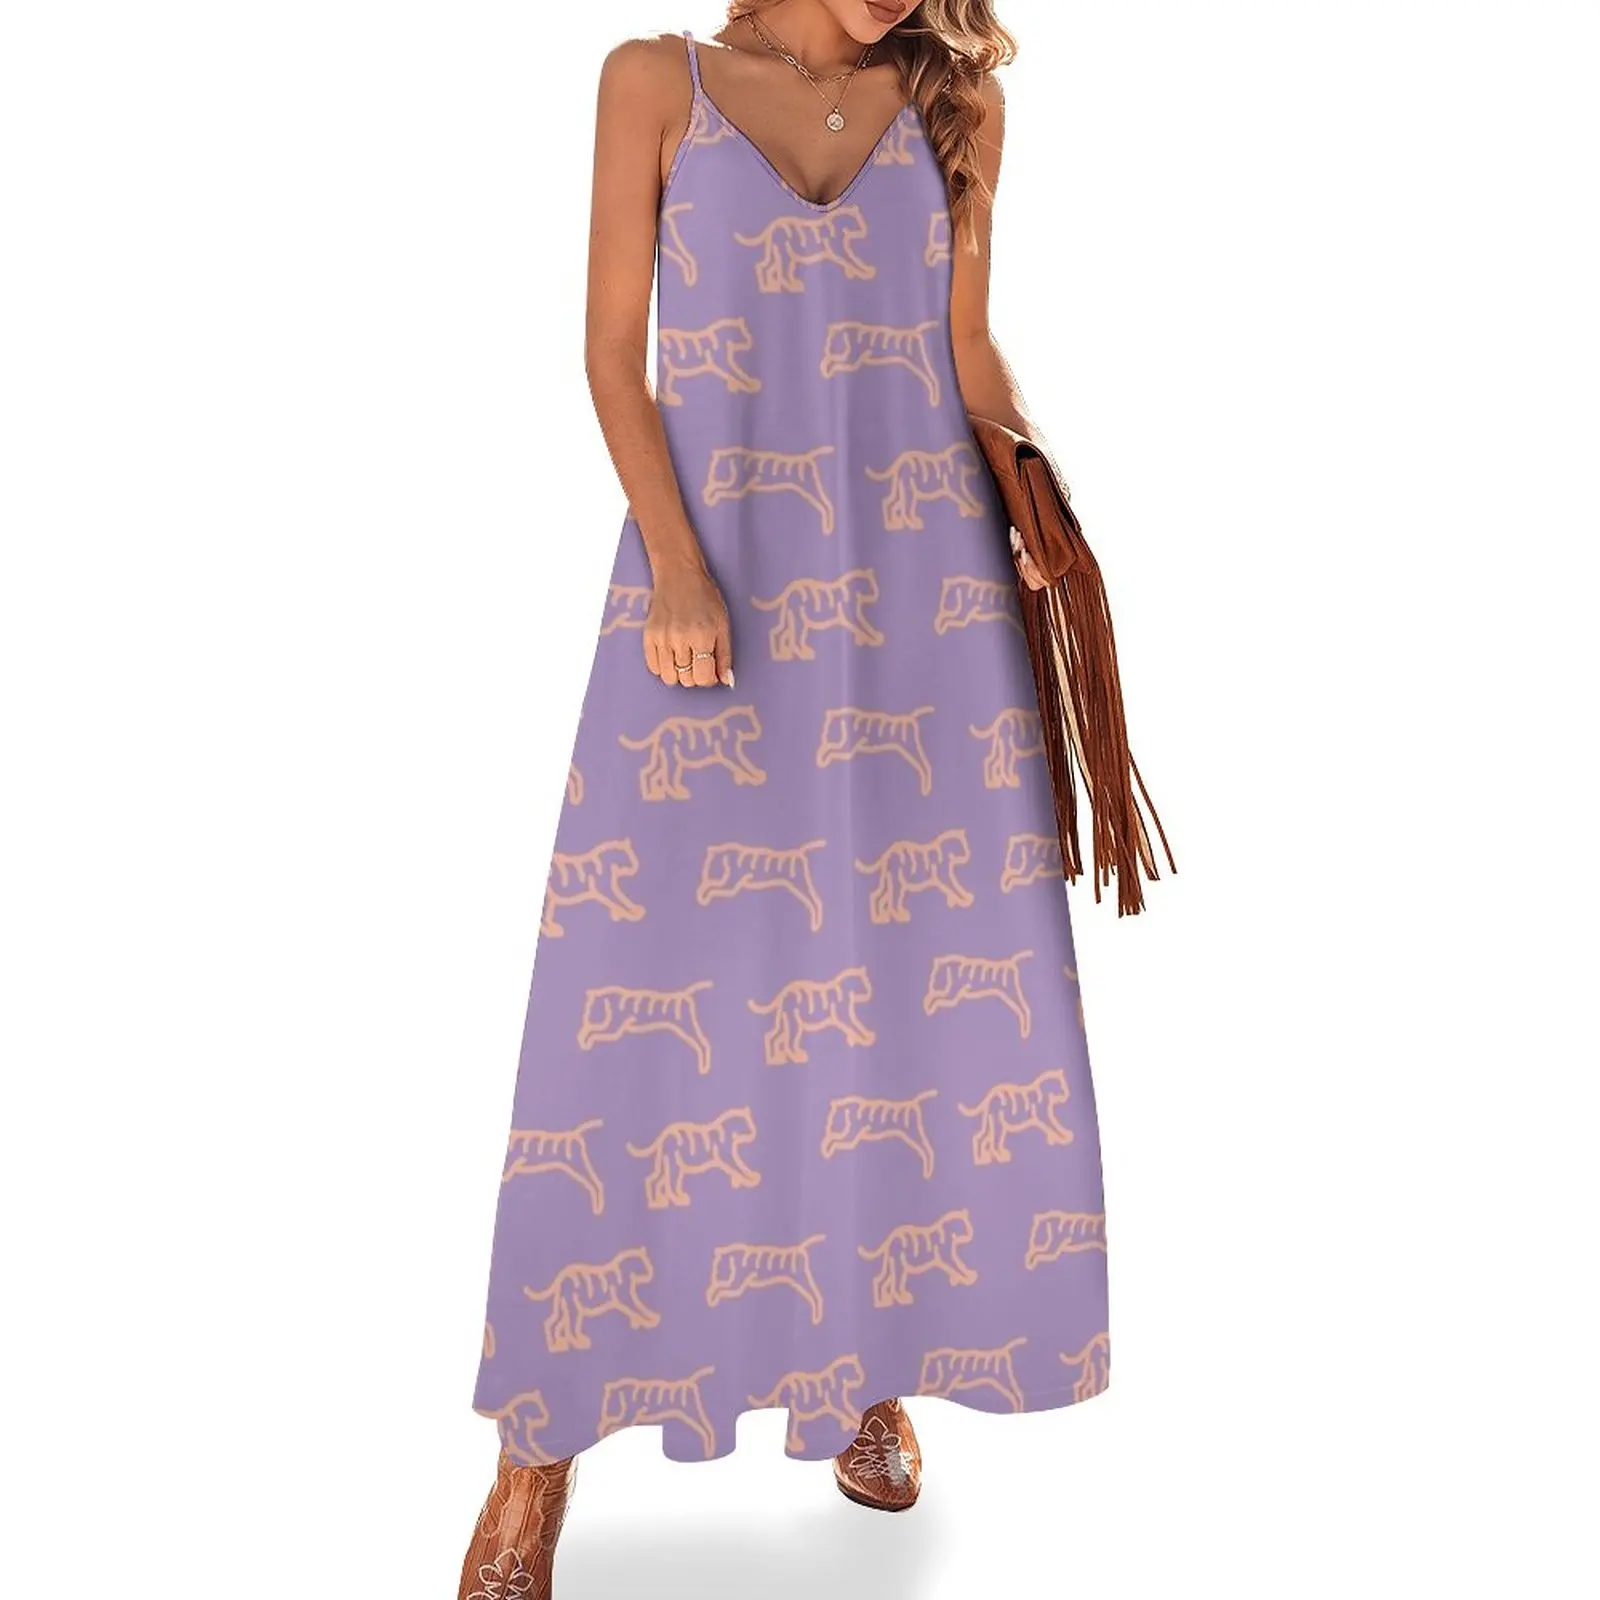 

New Sherbet Tigers Sleeveless Dress beach outfits for women women party dresses elegant dress